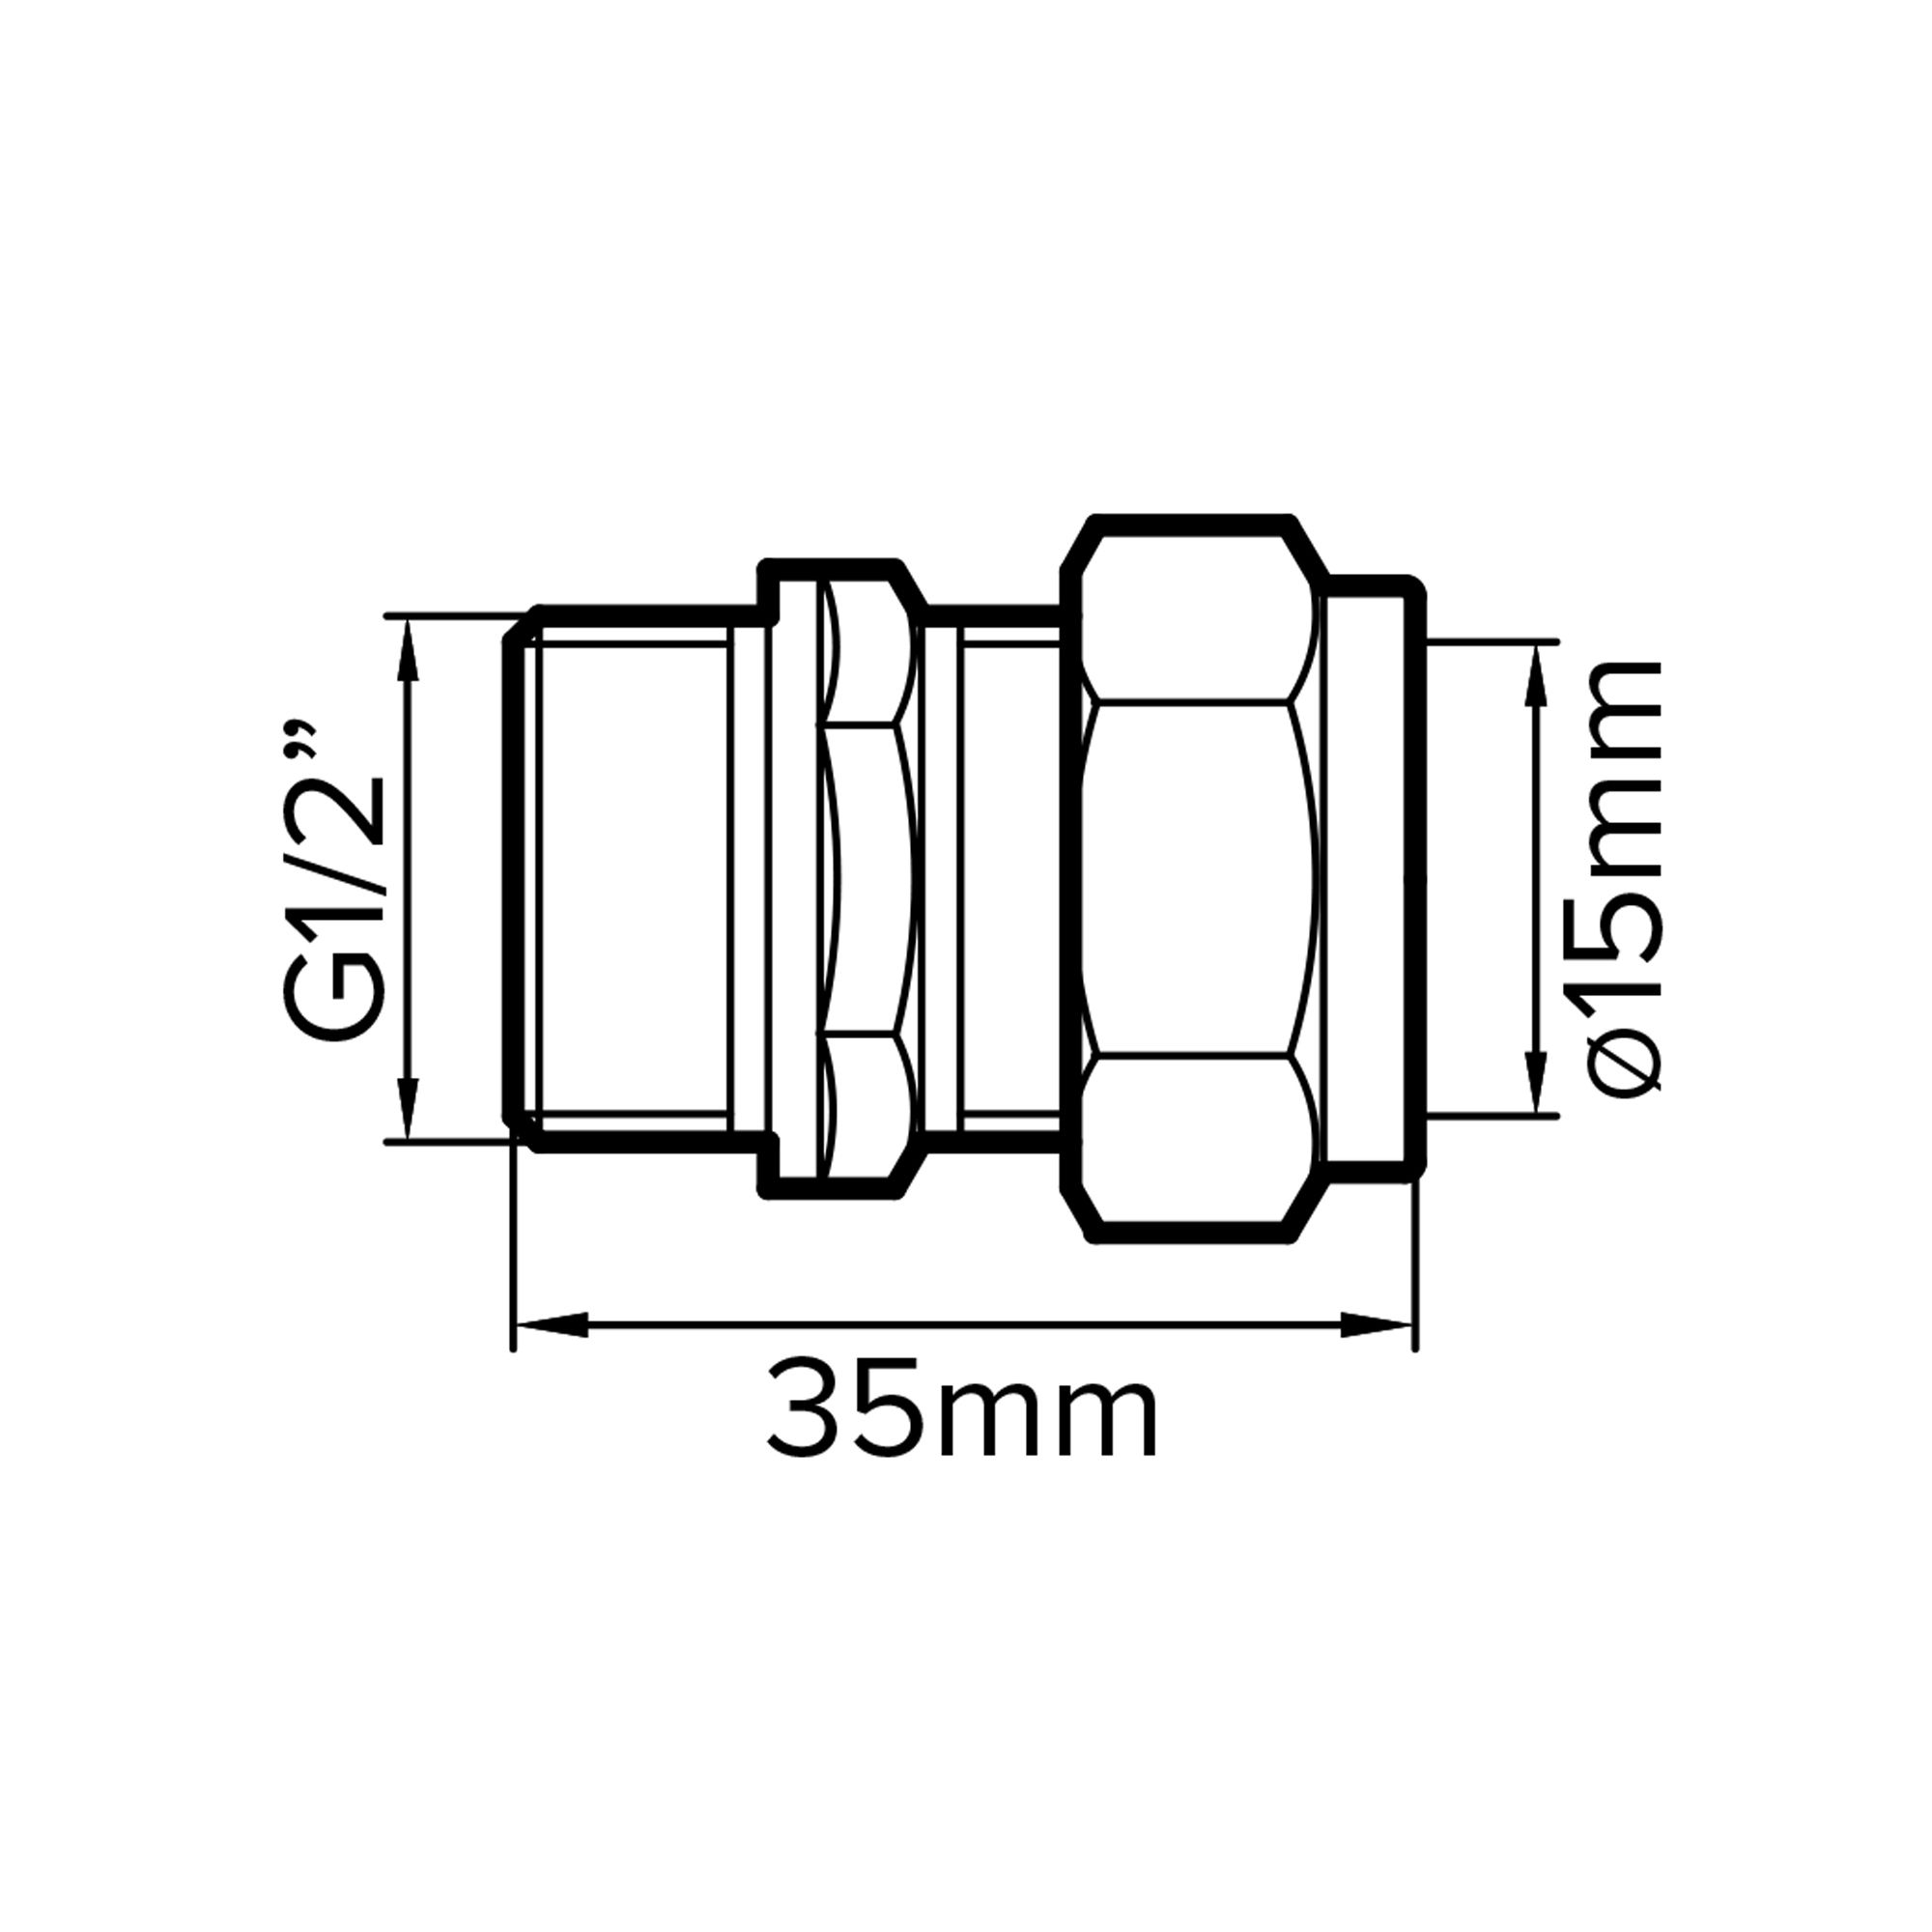 Plumbsure Compression Coupler (Dia)15mm, (L)35.3mm